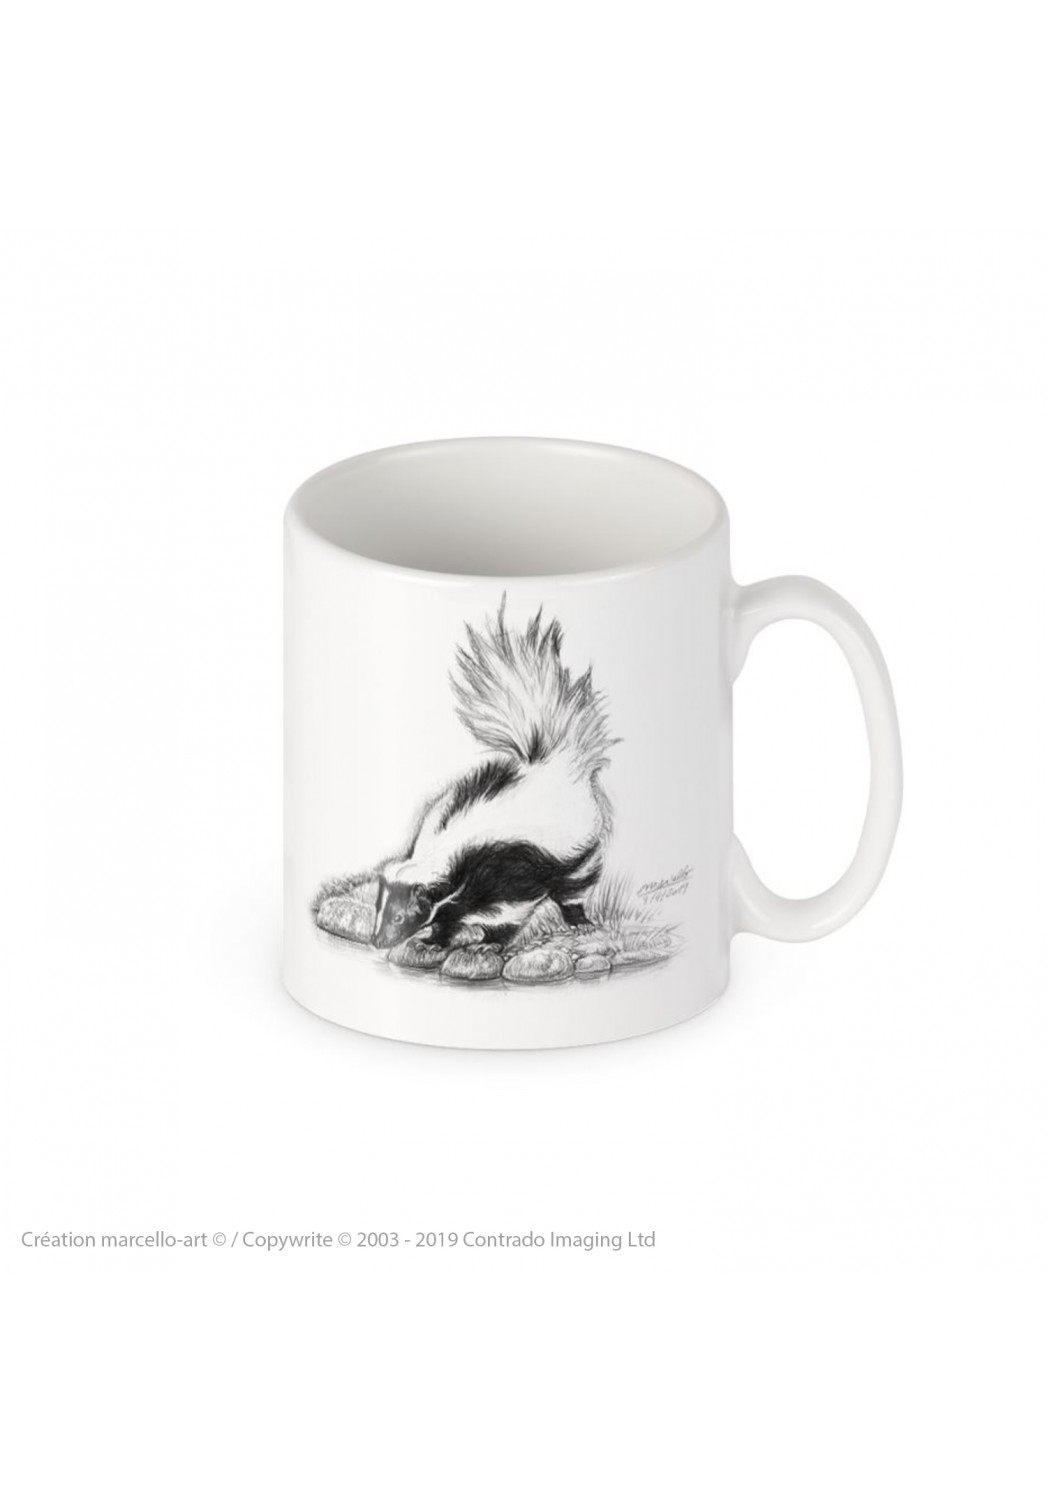 Marcello-art: Decoration accessoiries Porcelain mug 393 skunk